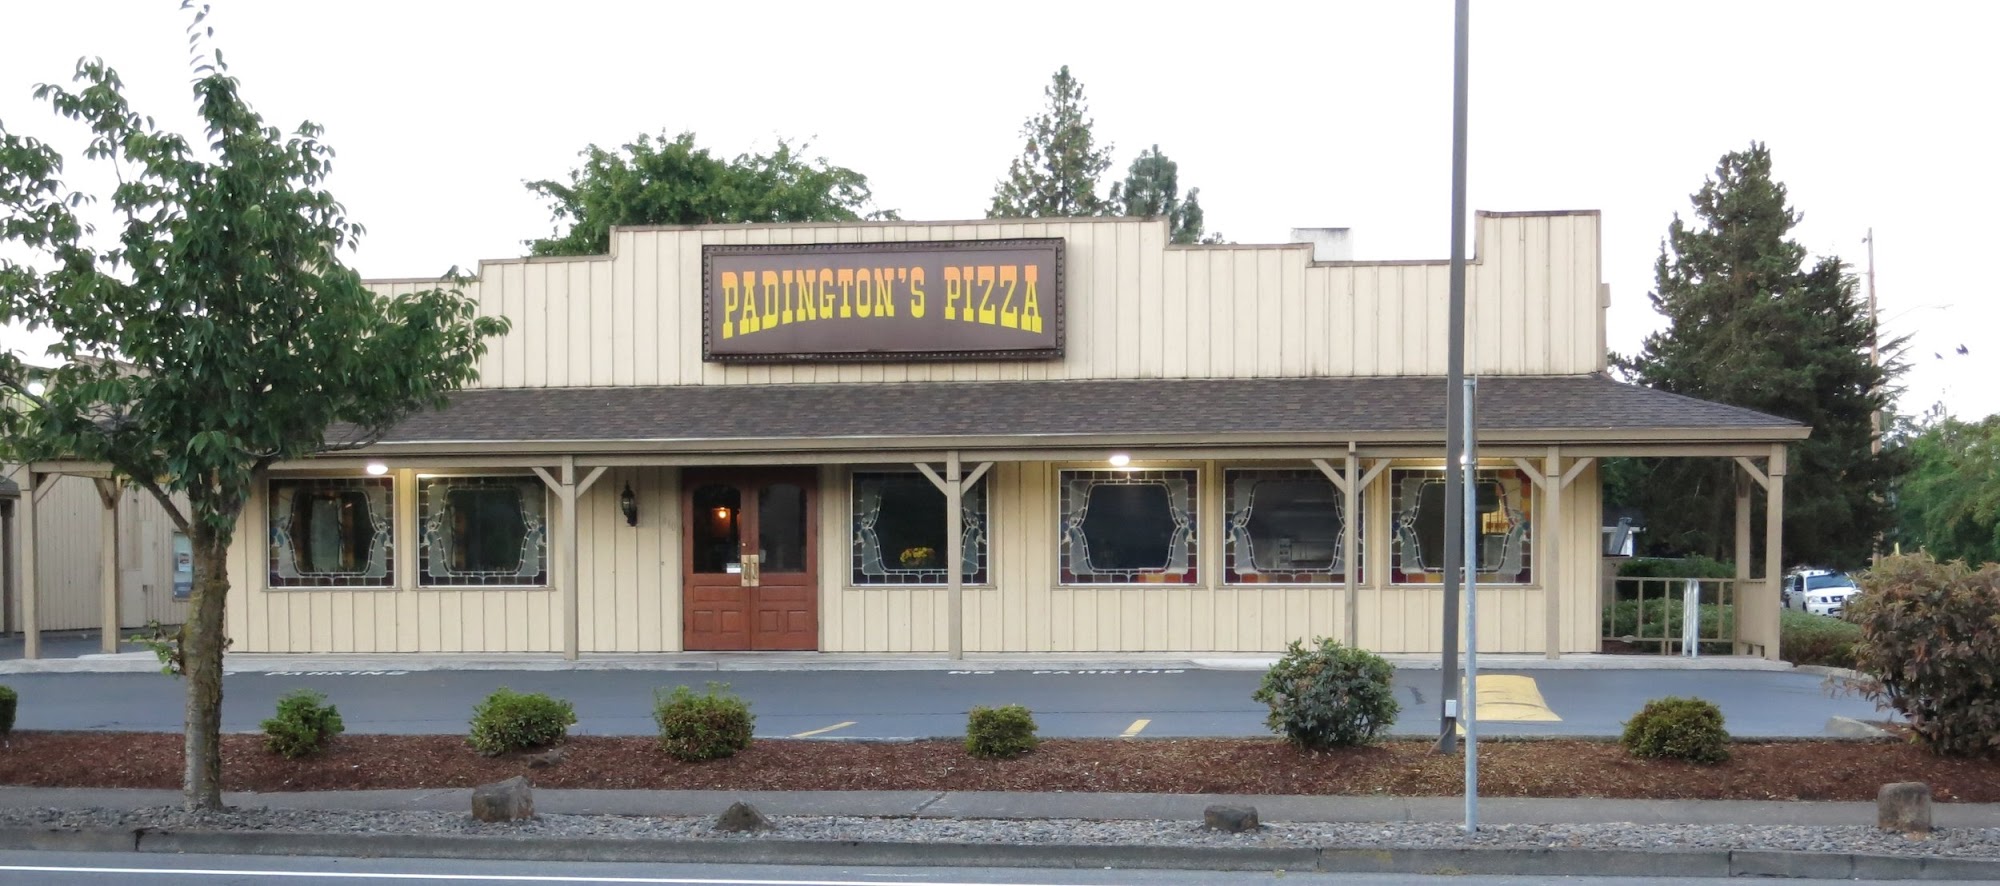 The Original Padington's Pizza North Salem